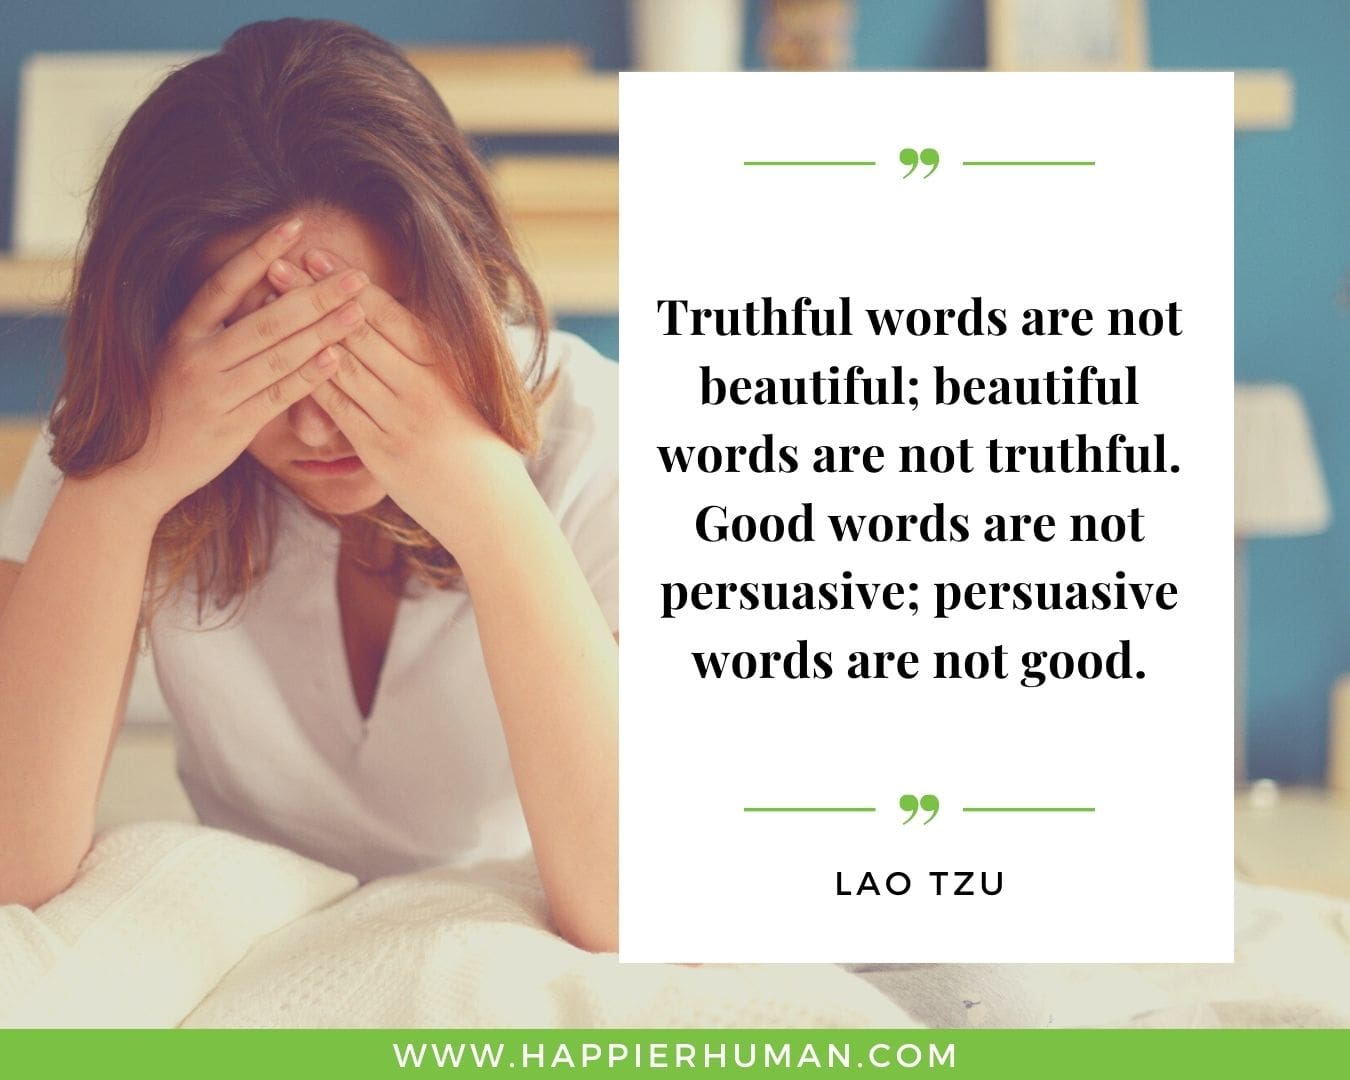 Broken Trust Quotes - “Truthful words are not beautiful; beautiful words are not truthful. Good words are not persuasive; persuasive words are not good.” - Lao Tzu